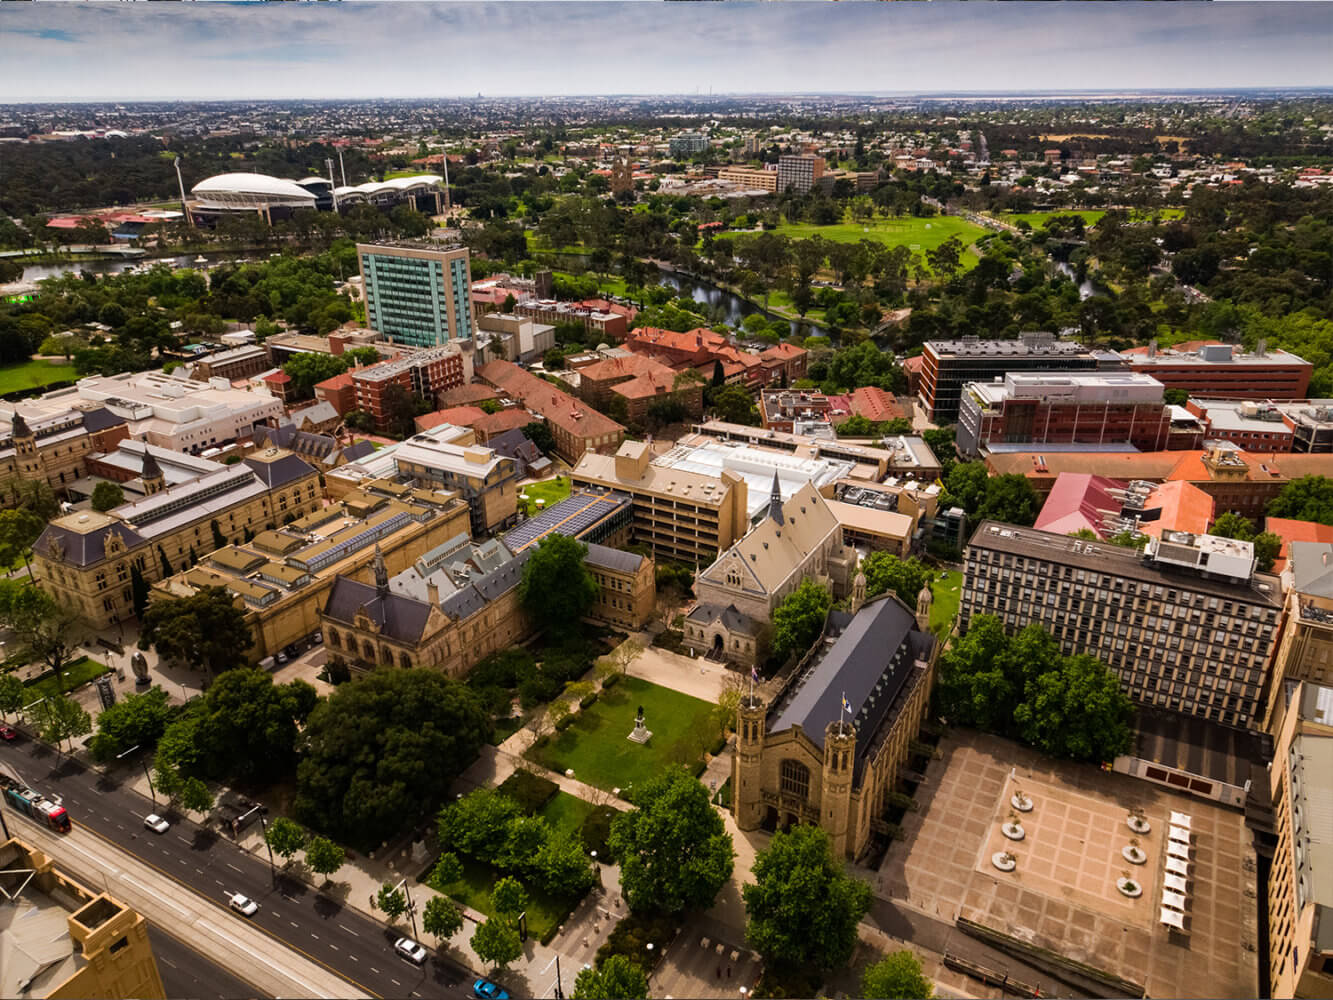 The University of Adelaide – Universities Australia